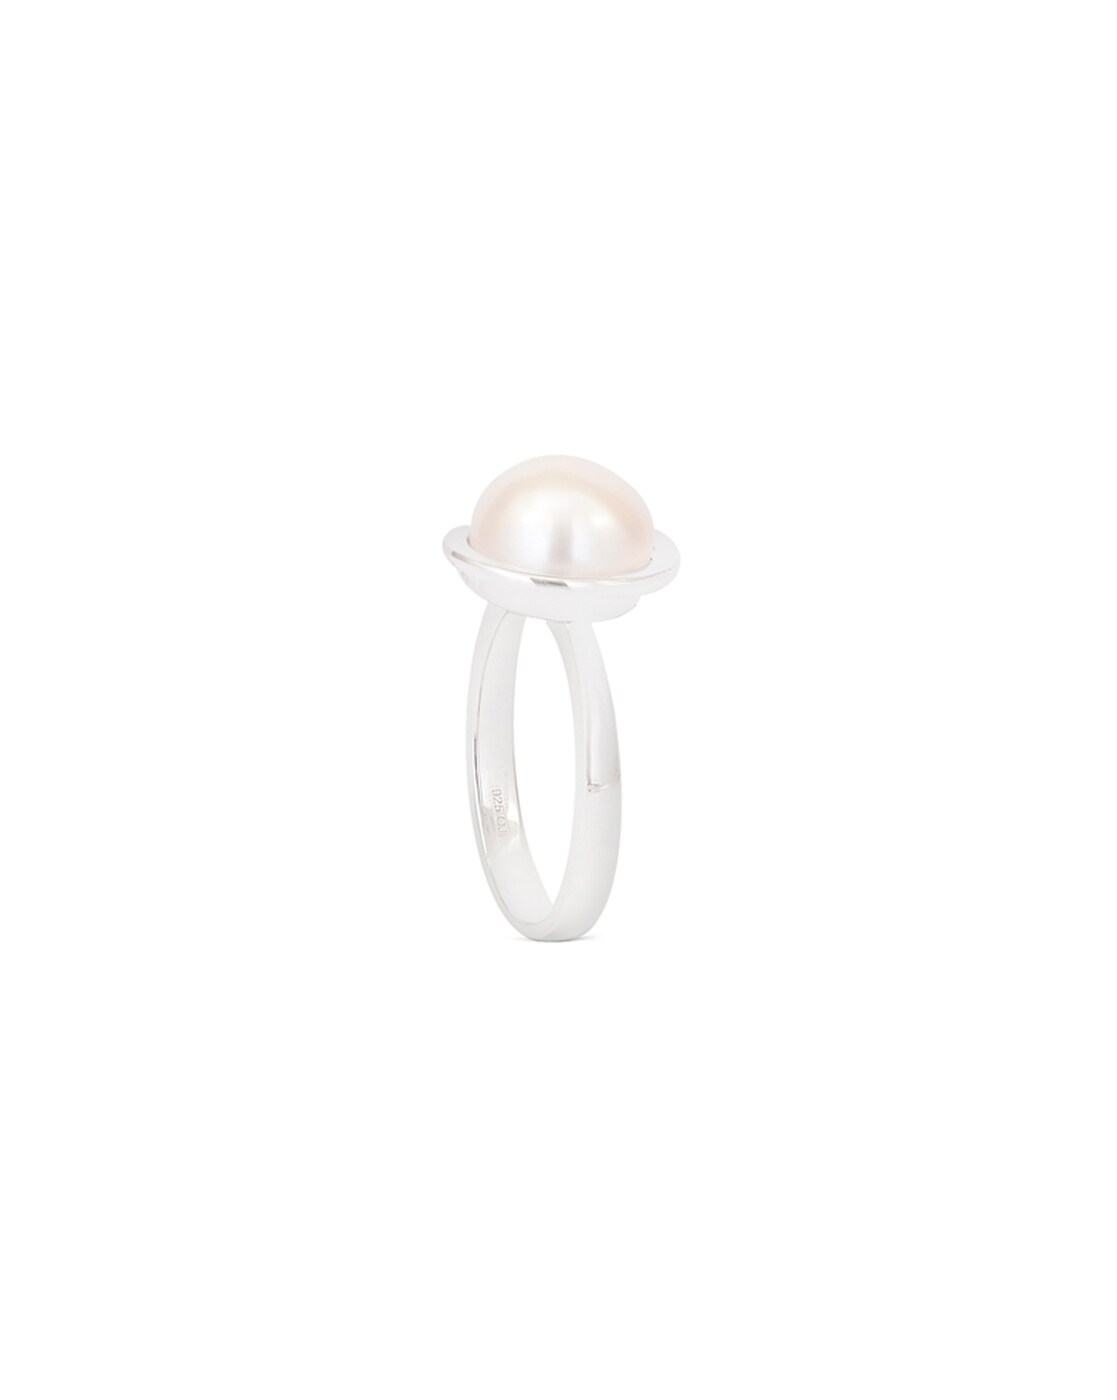 bow wedding ring white gold diamond pearl ring AP155